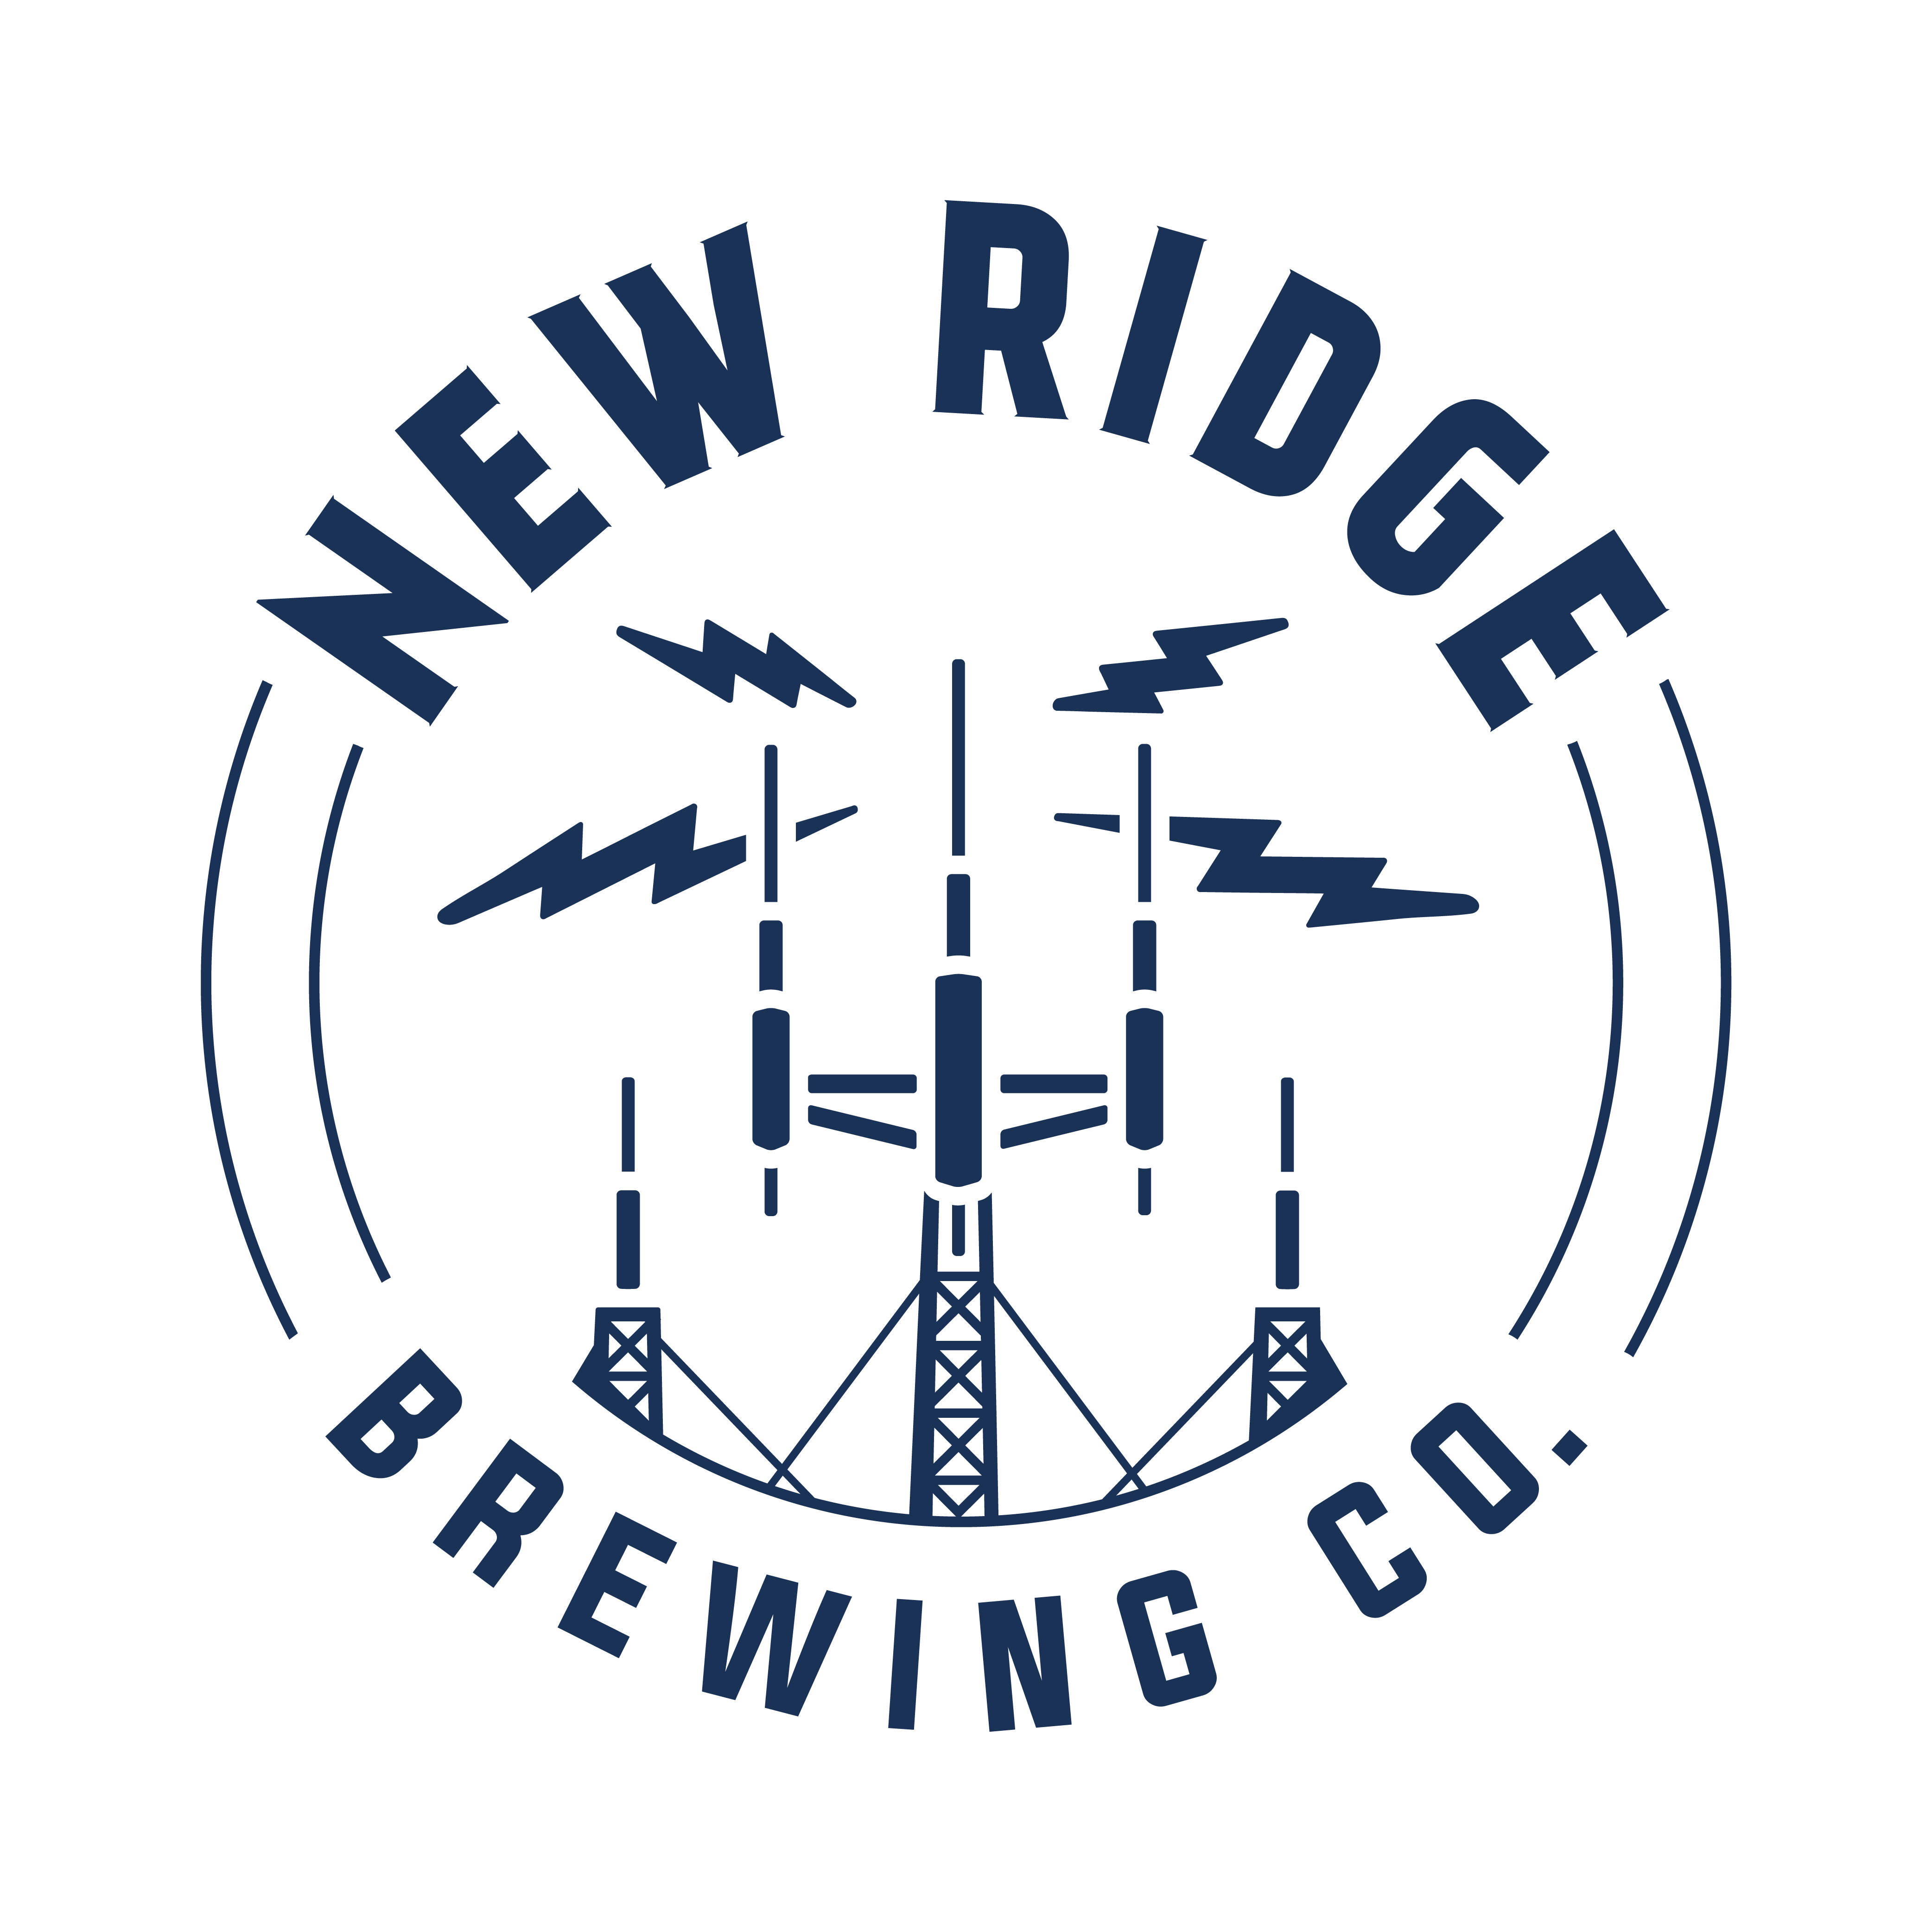 New Ridge Brewing Company